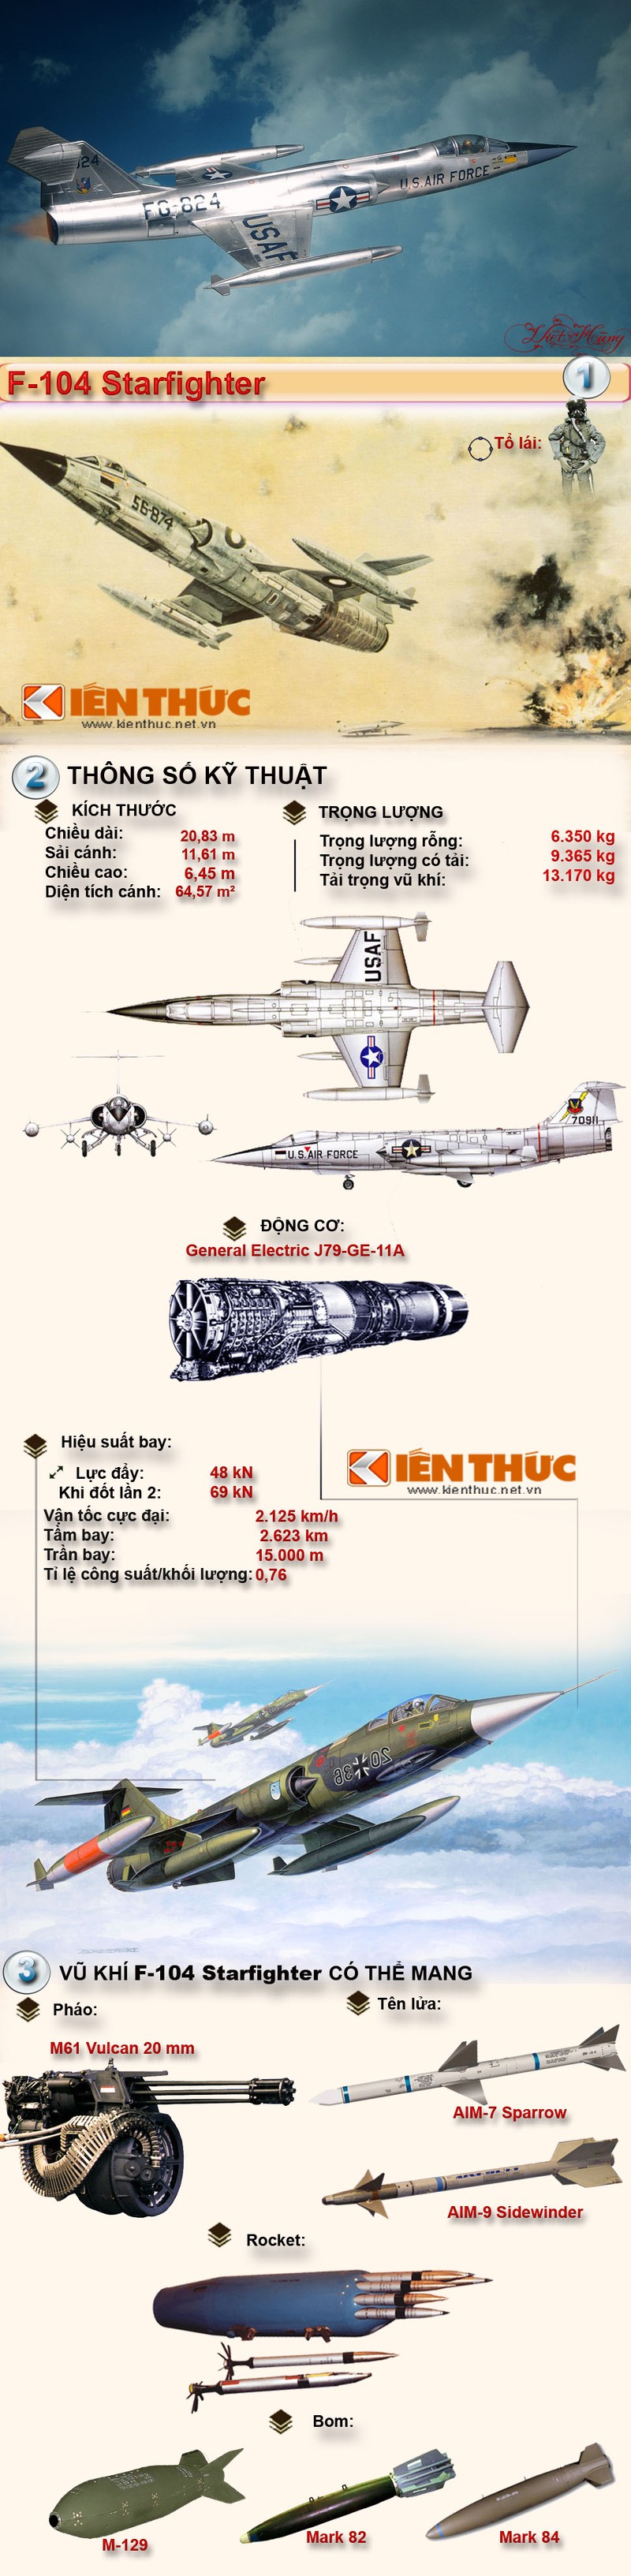 Infographic: Dong chien dau co the ky bai tran o Viet Nam (4)